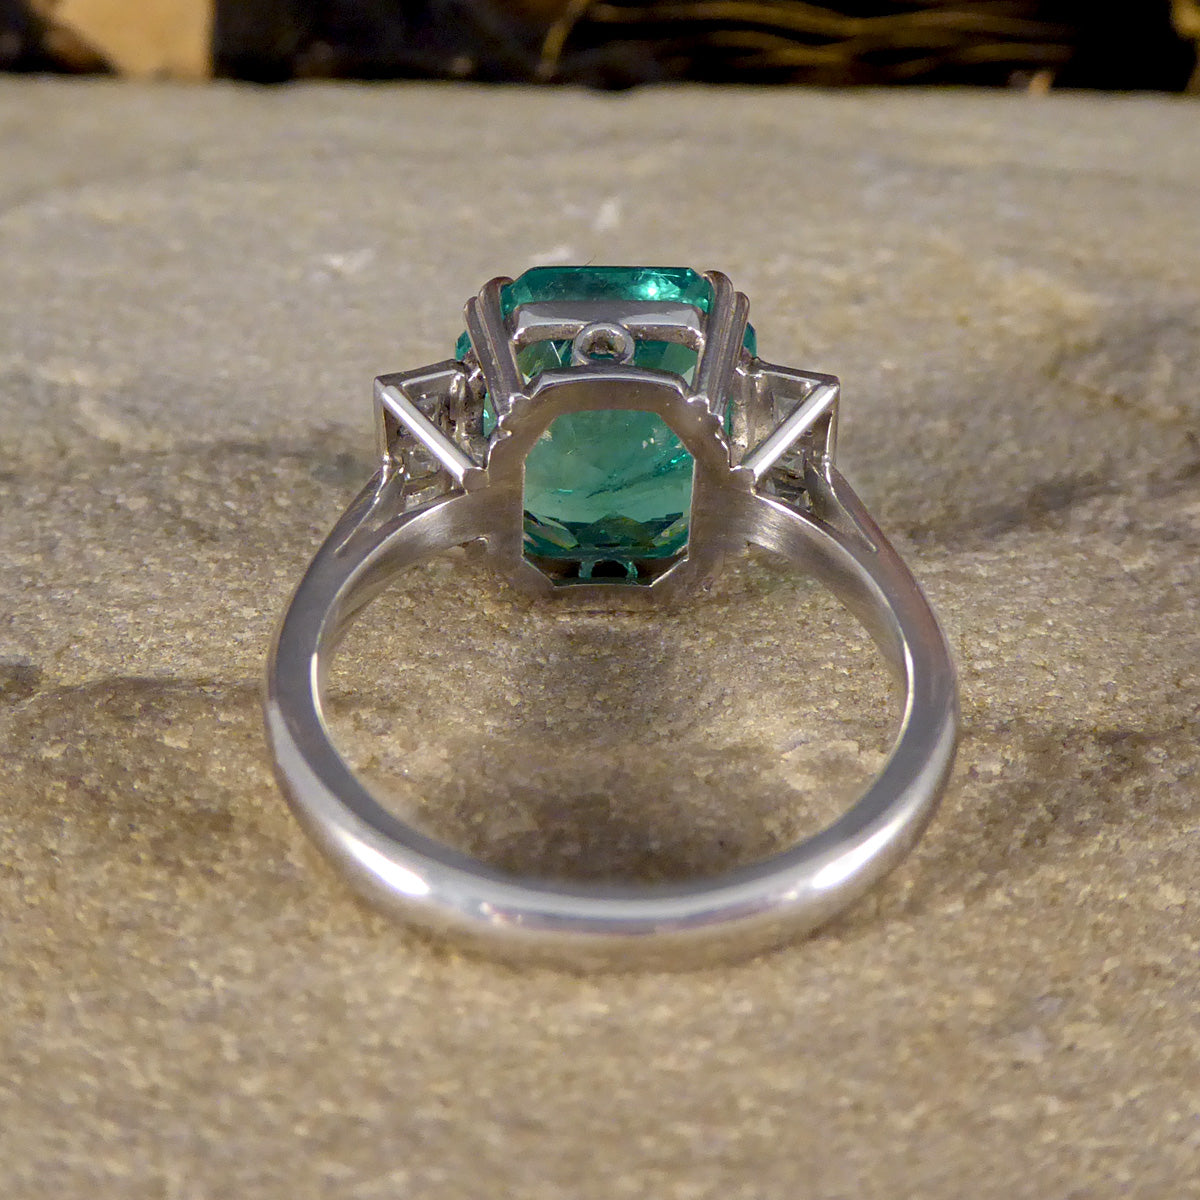 Bright 6.19ct Octagonal Cut Columbian Emerald and Diamond Ring in Platinum with Gem Cert